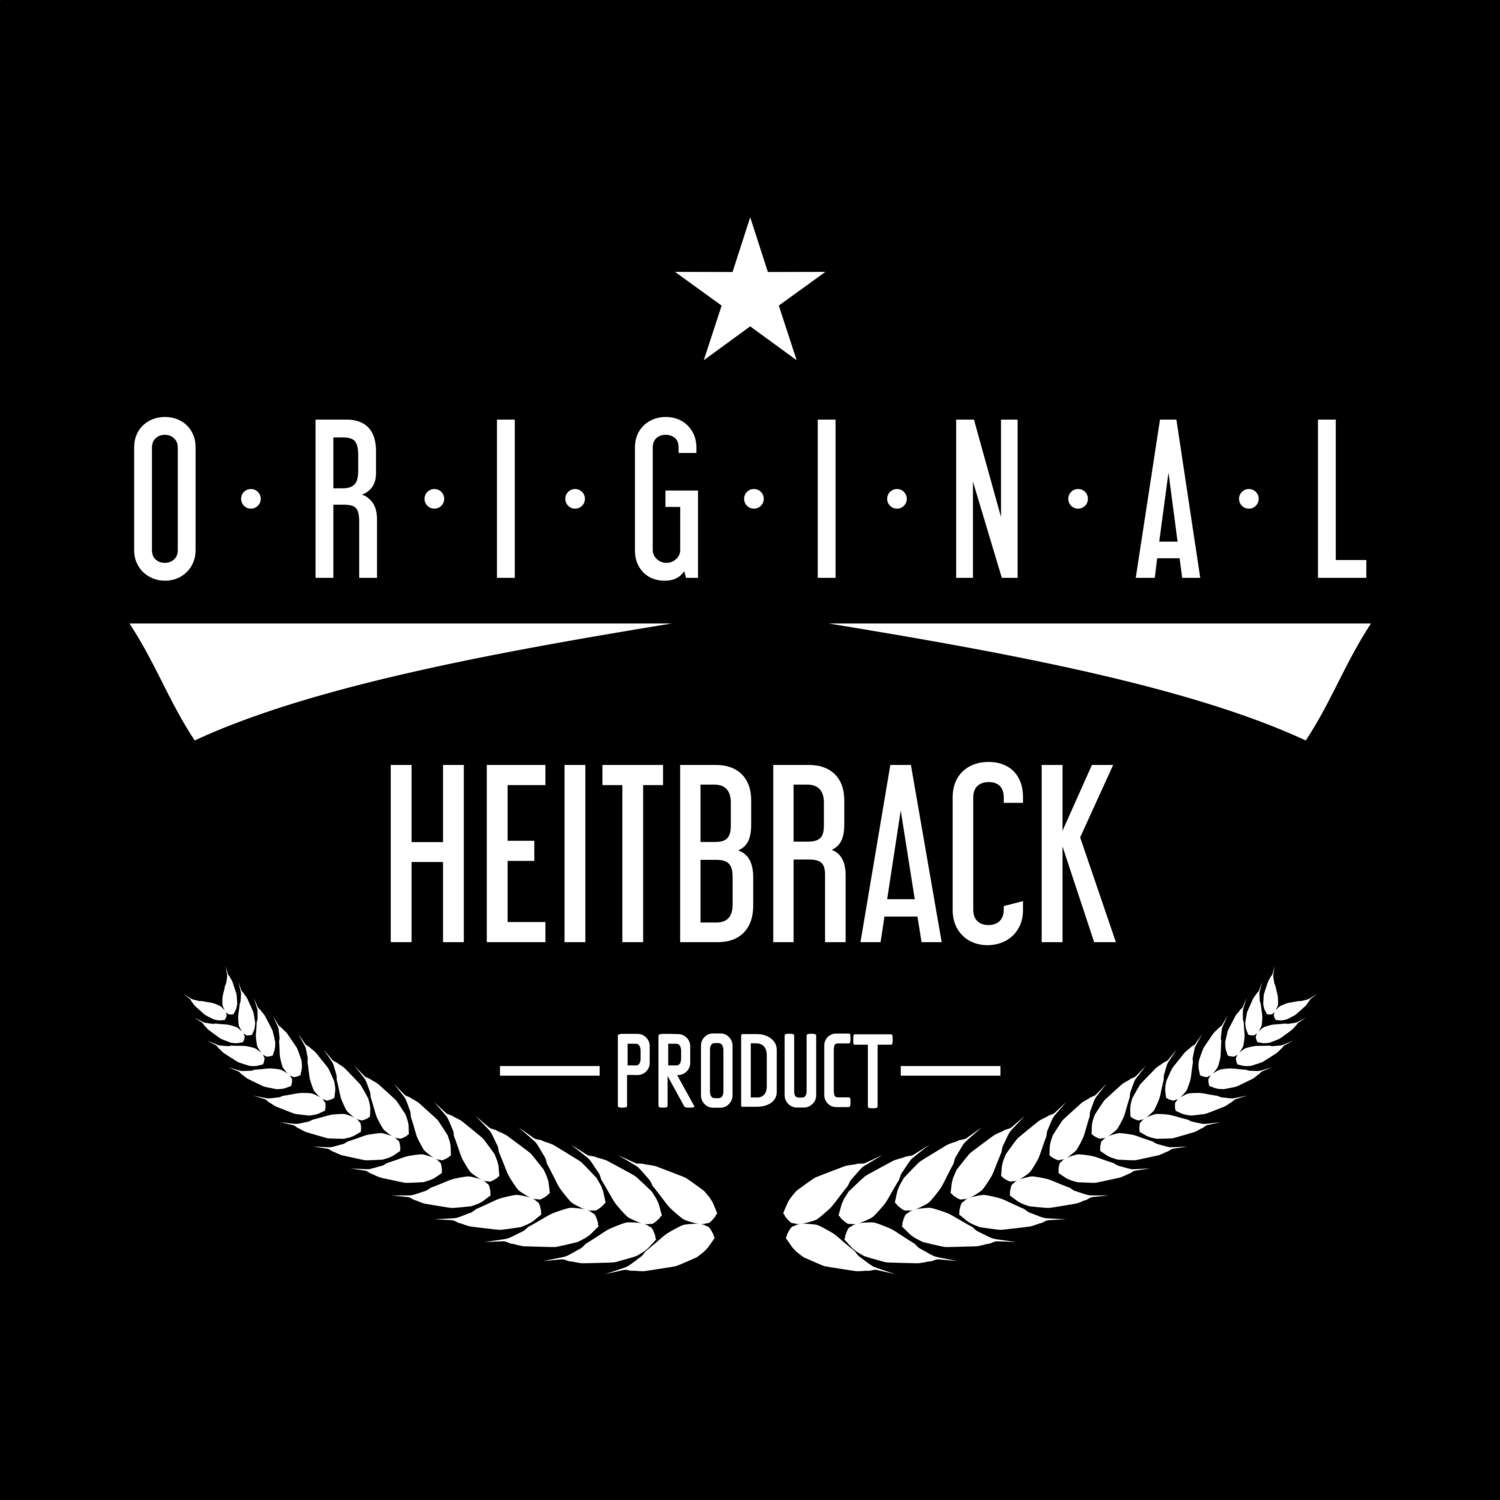 Heitbrack T-Shirt »Original Product«